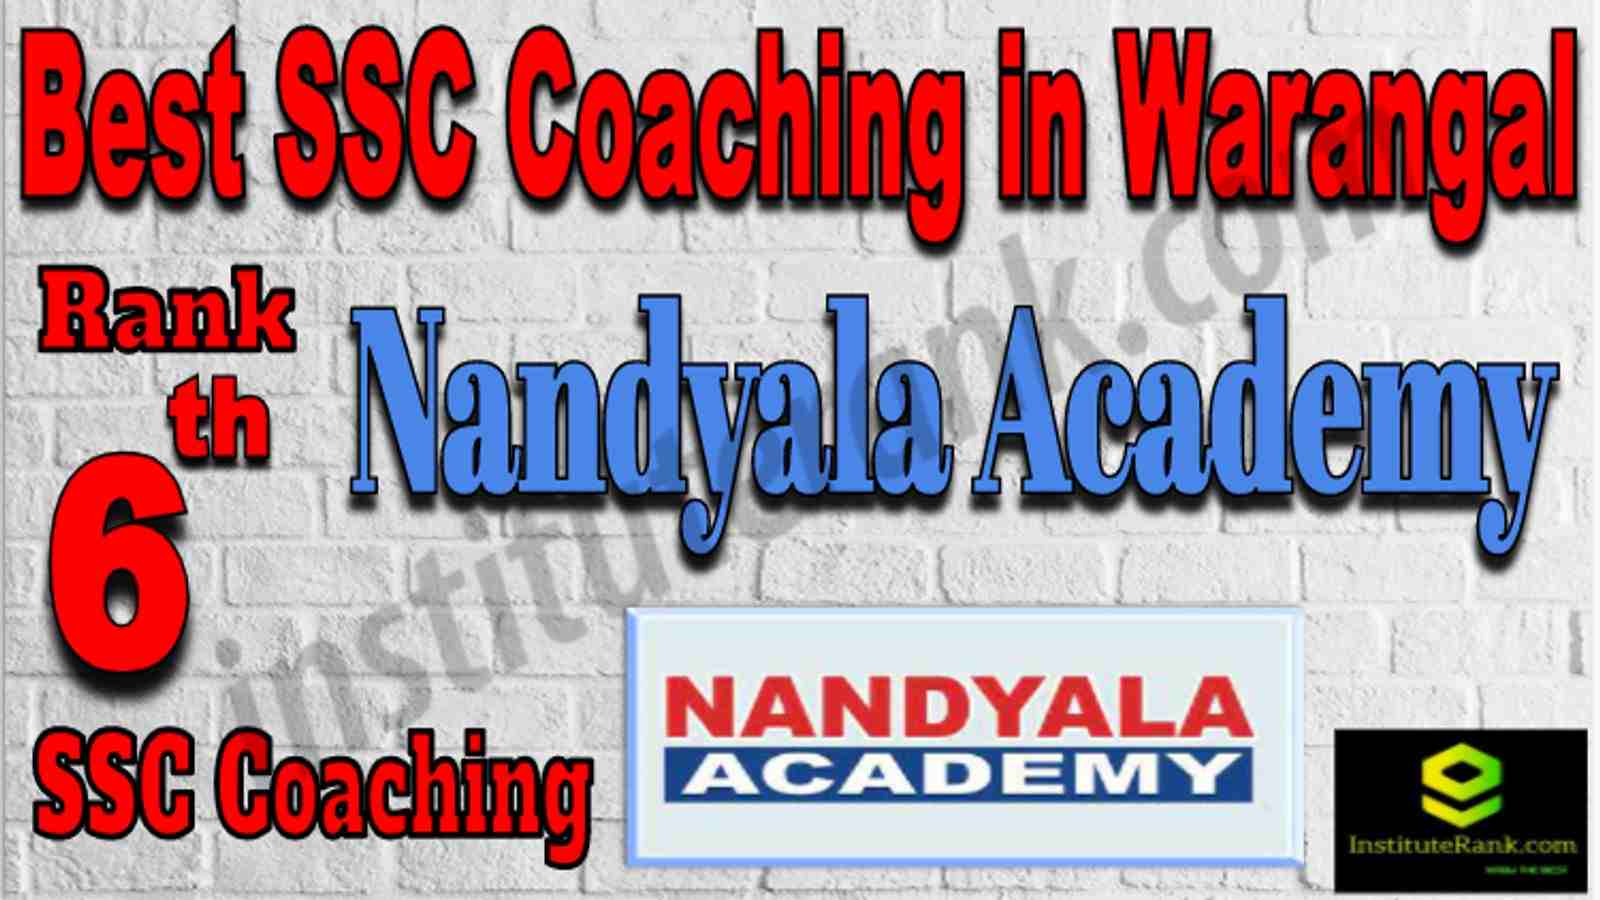 Rank 6 Best SSC Coaching in Warangal